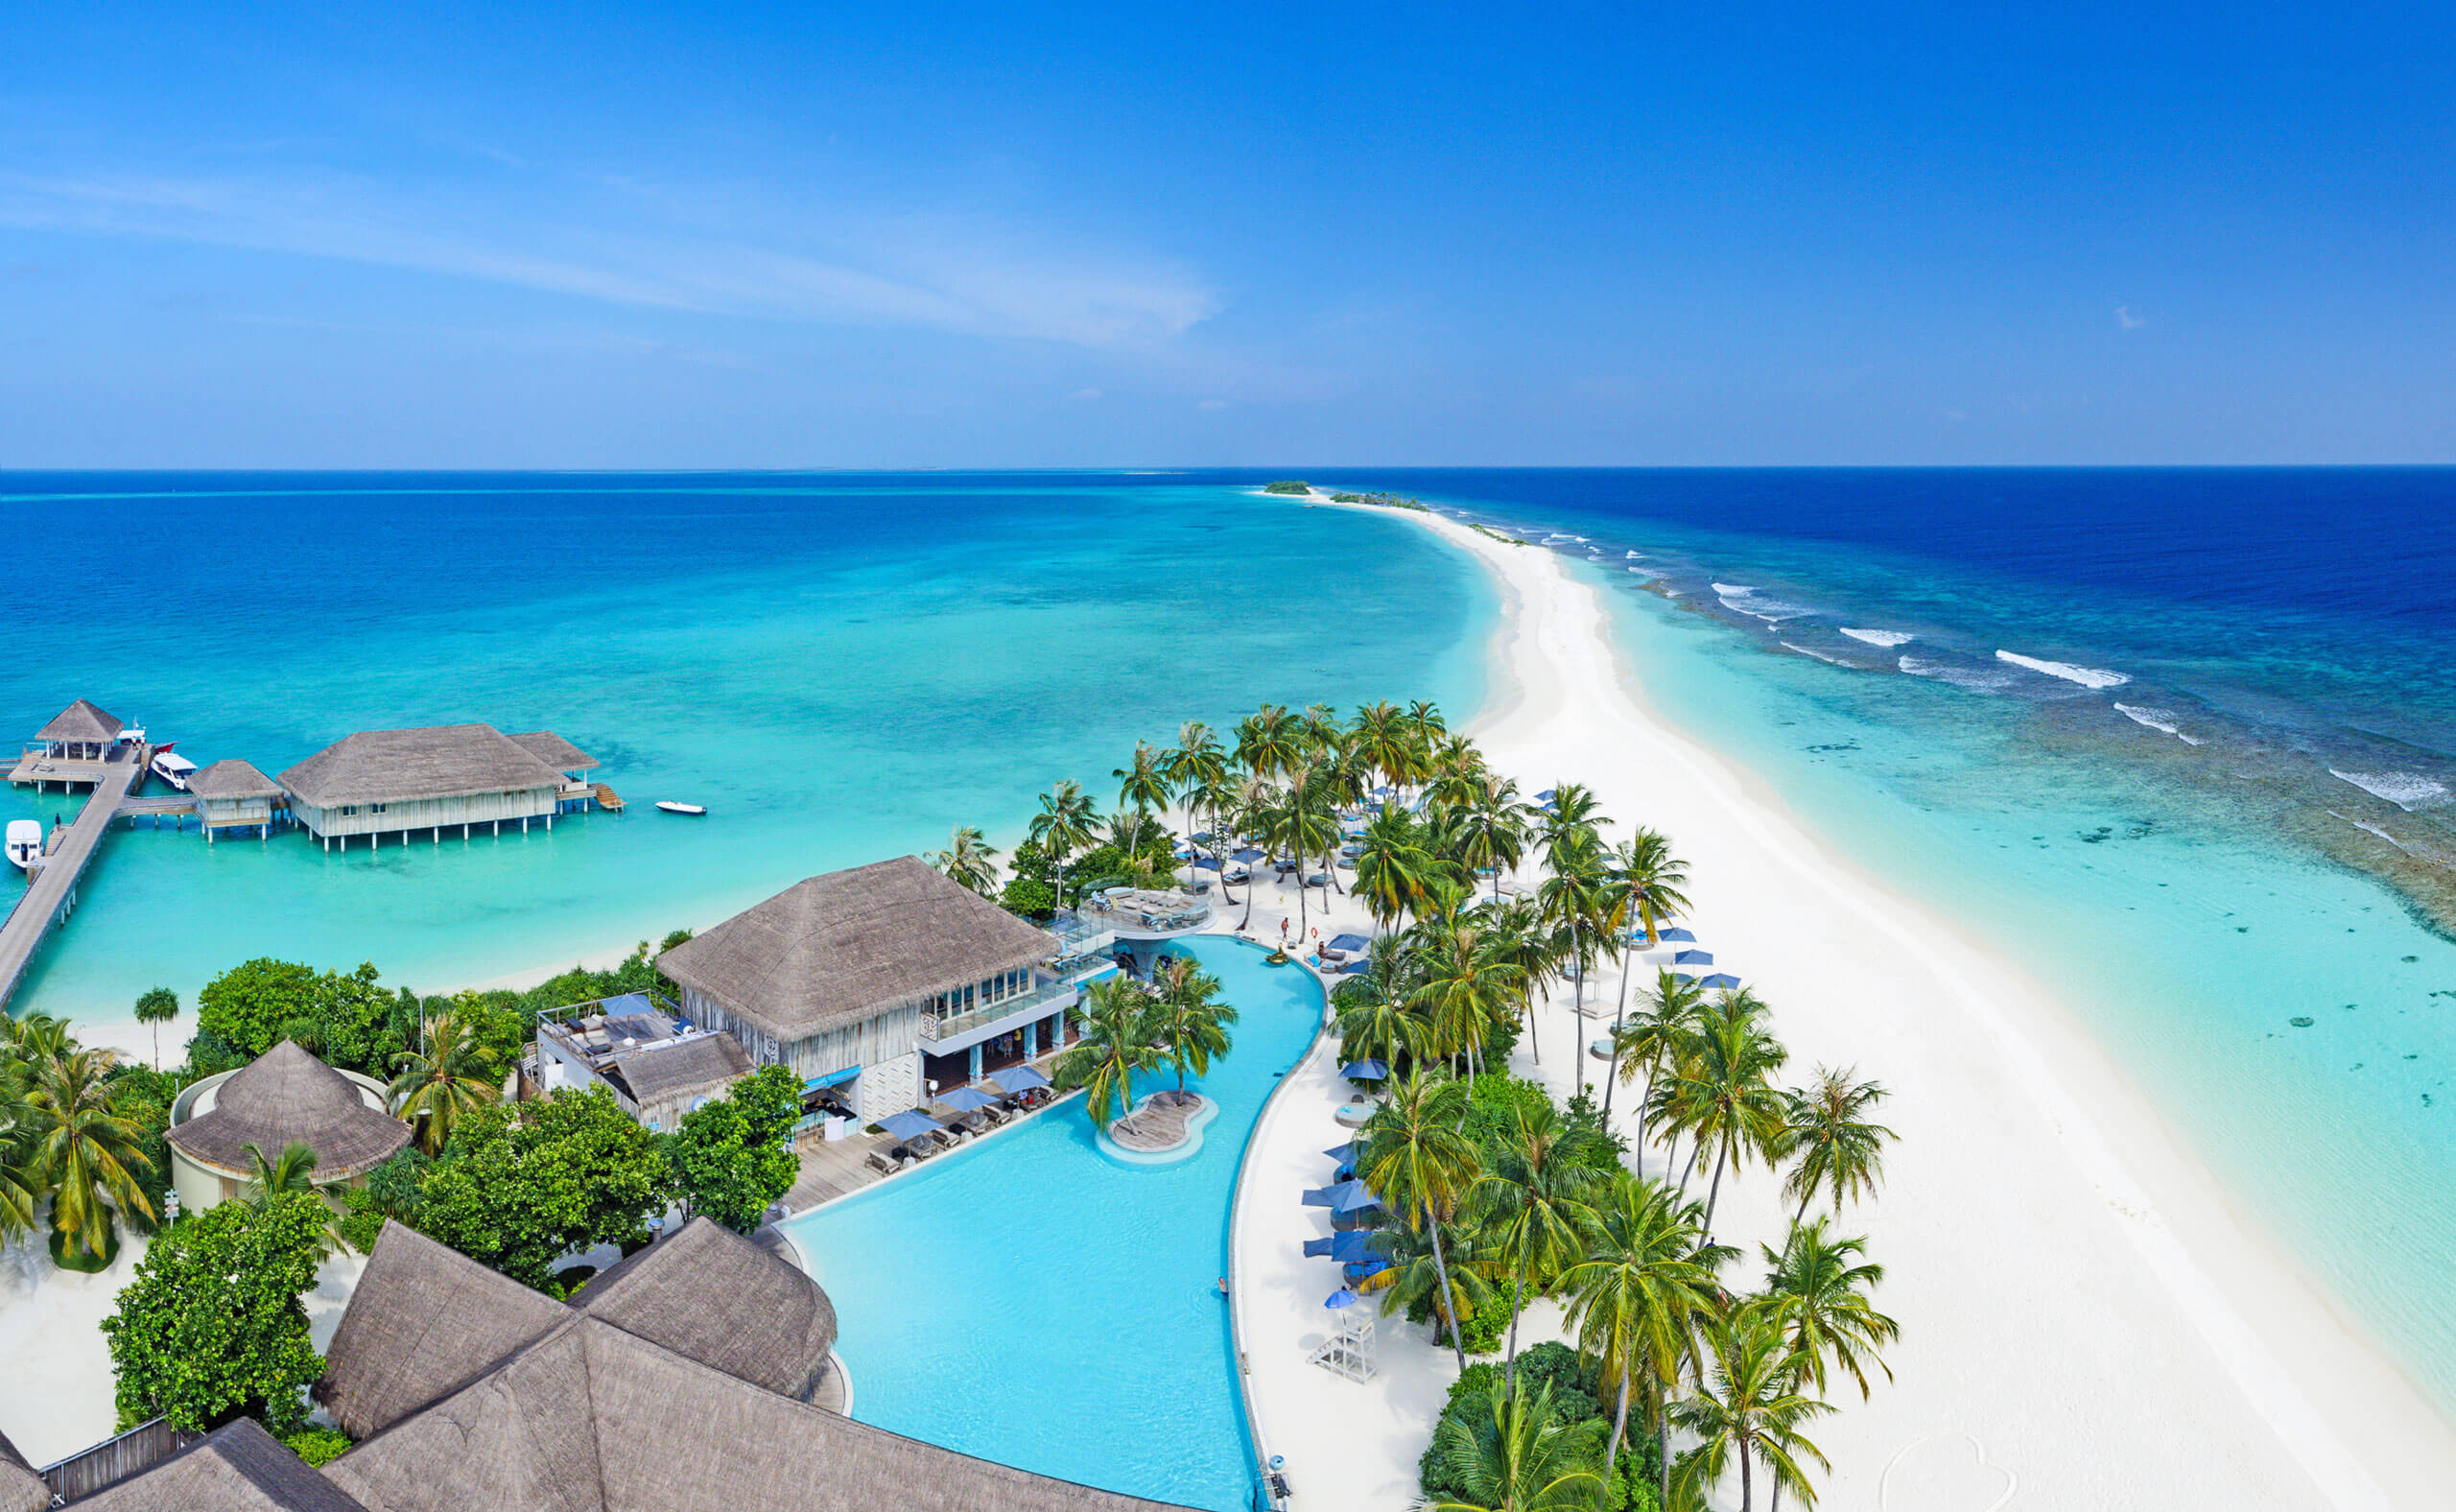 Maldives Listed as a Top Popular Destination – A Sought-after Travel Destination